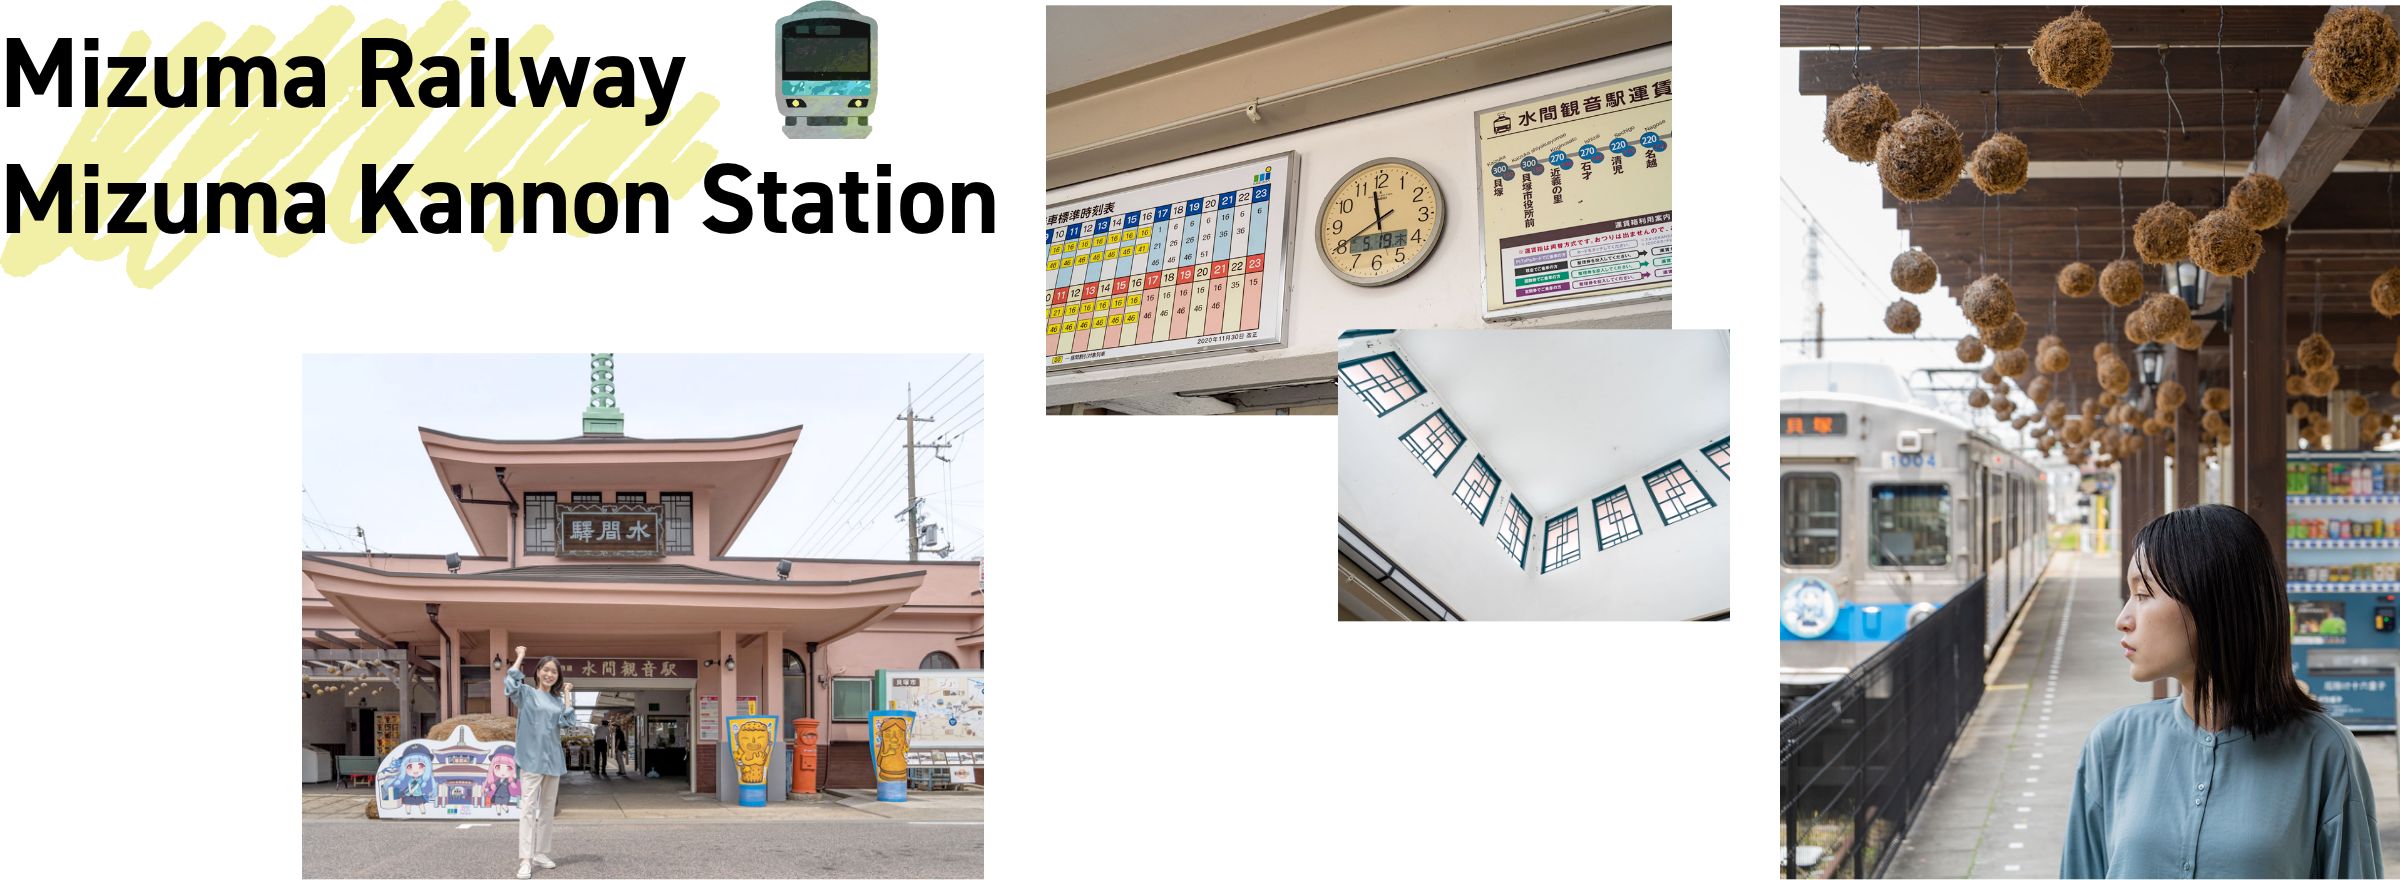 Mizuma Railway Mizuma Kannon Station